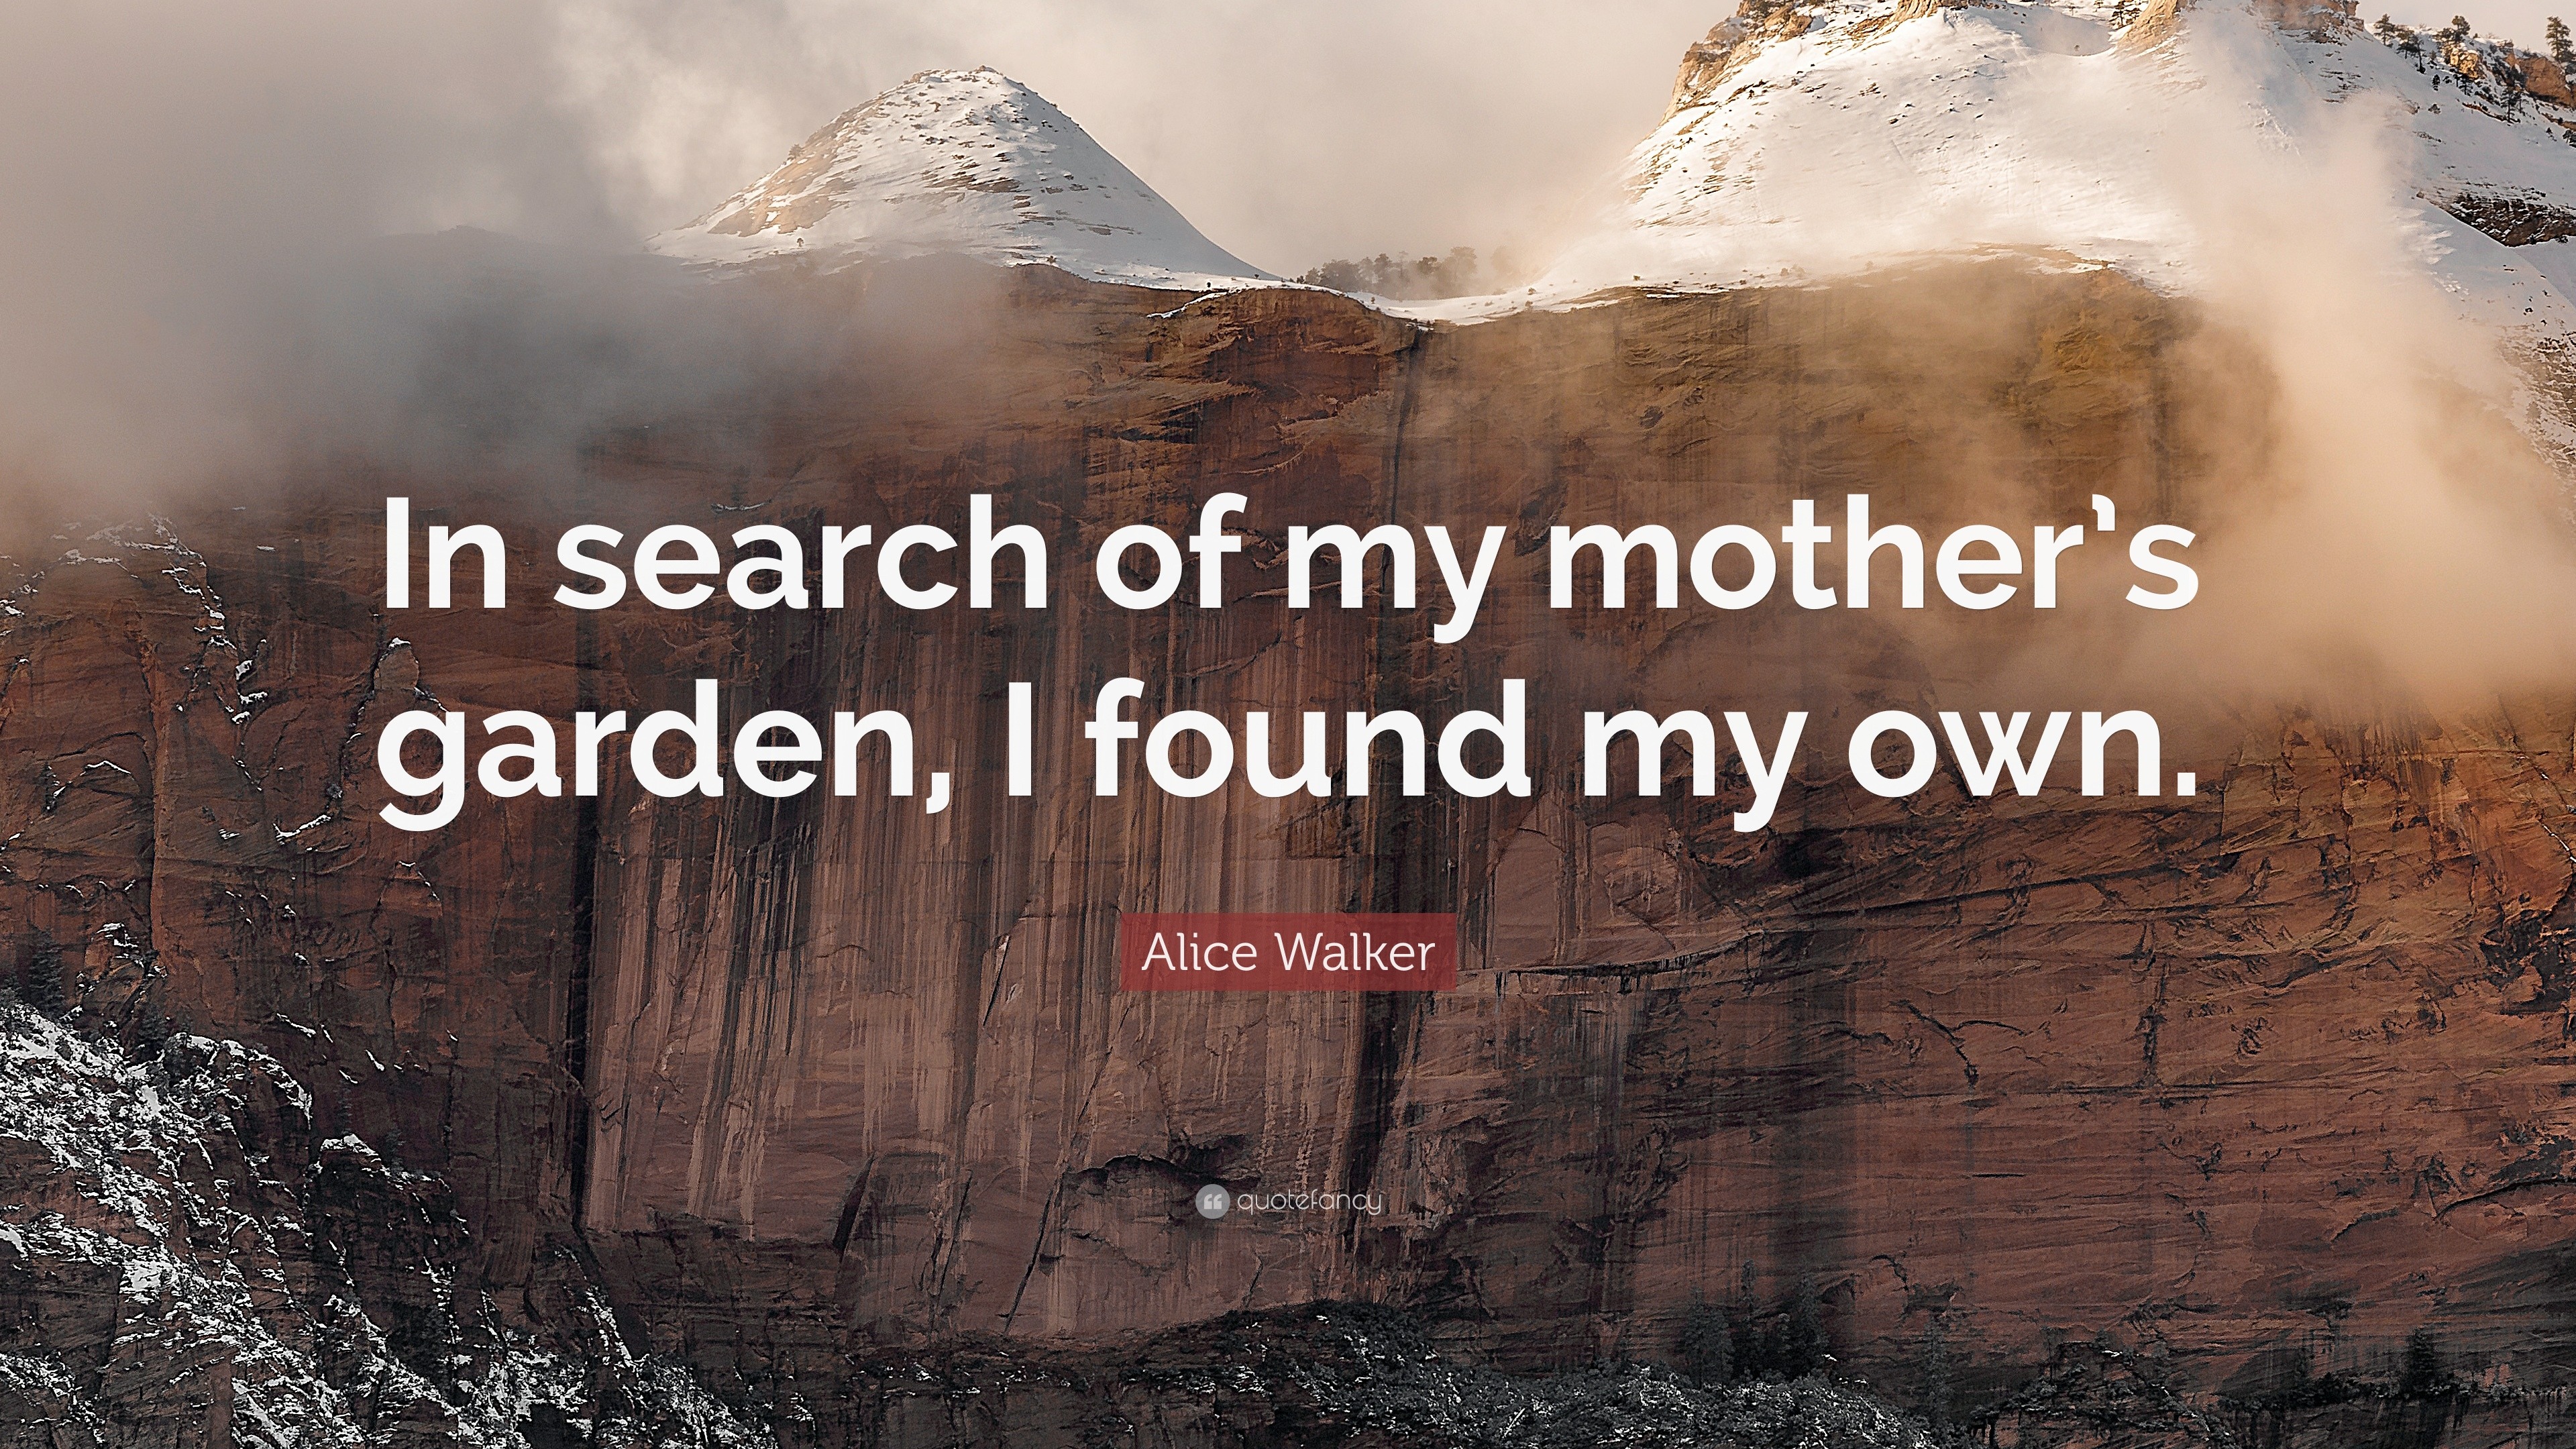 https://quotefancy.com/media/wallpaper/3840x2160/1838016-Alice-Walker-Quote-In-search-of-my-mother-s-garden-I-found-my-own.jpg